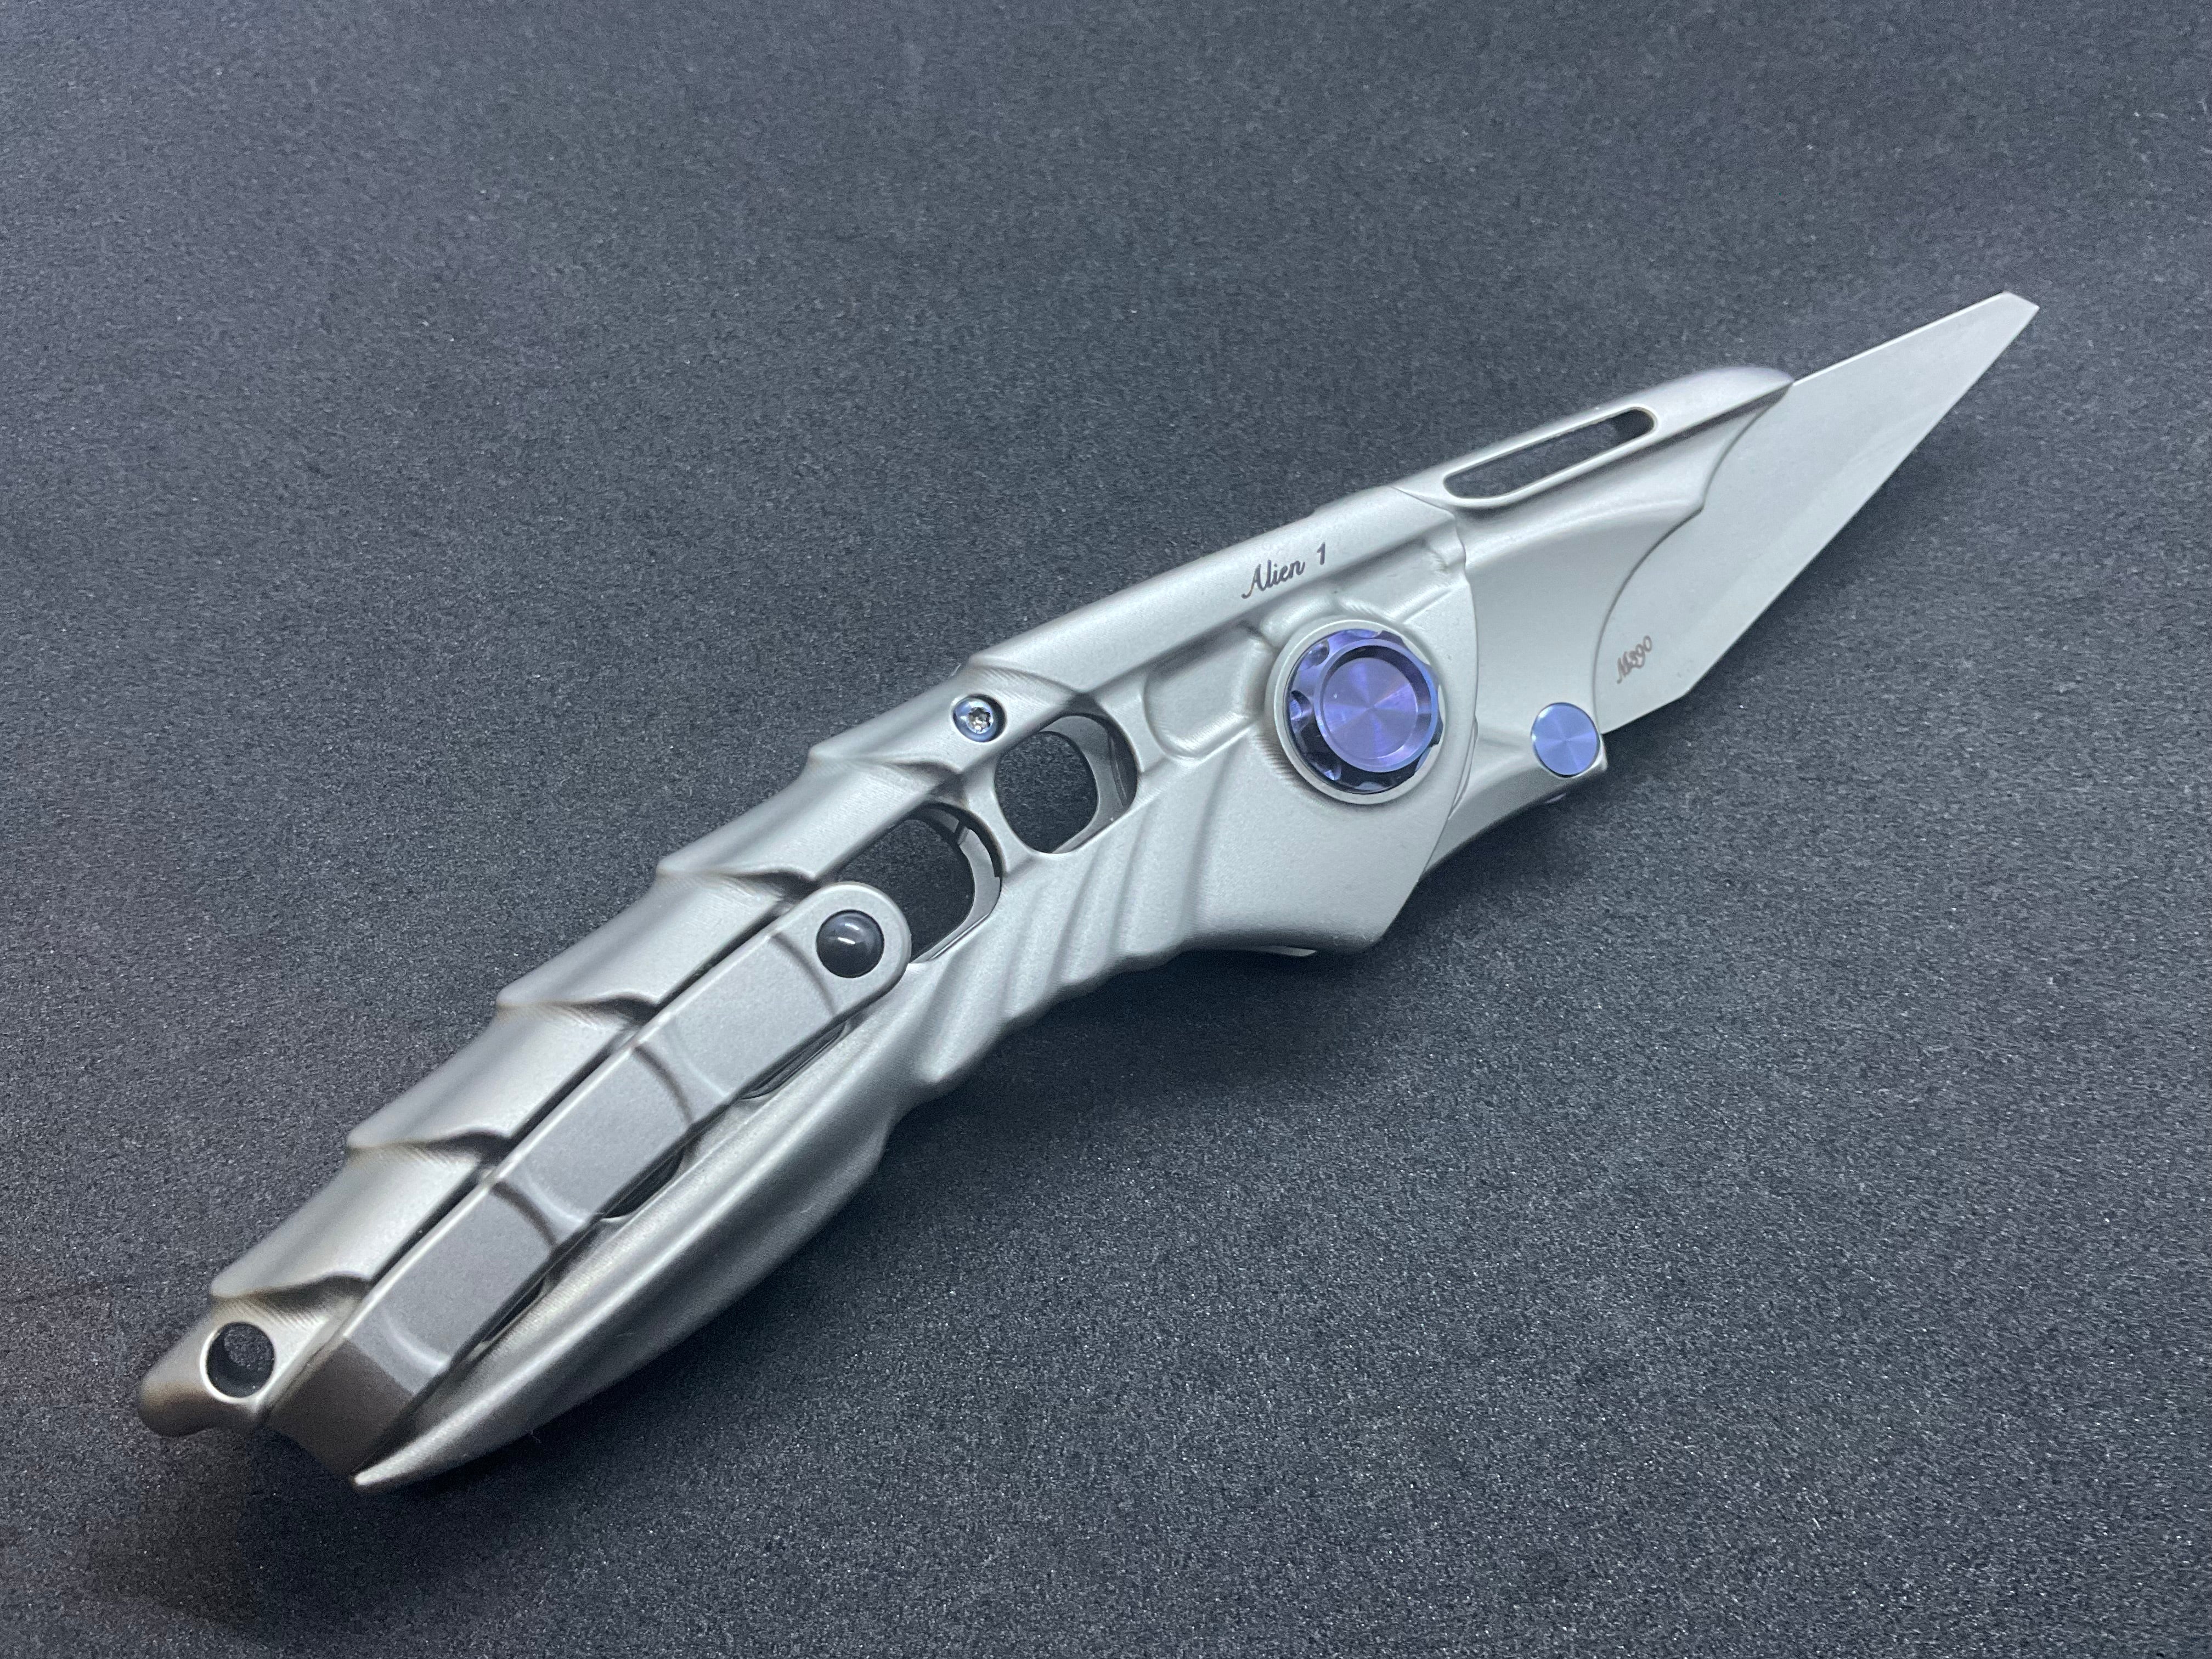 Rike Knife - Alien 1 + Fully Serrated Blade (updated version)